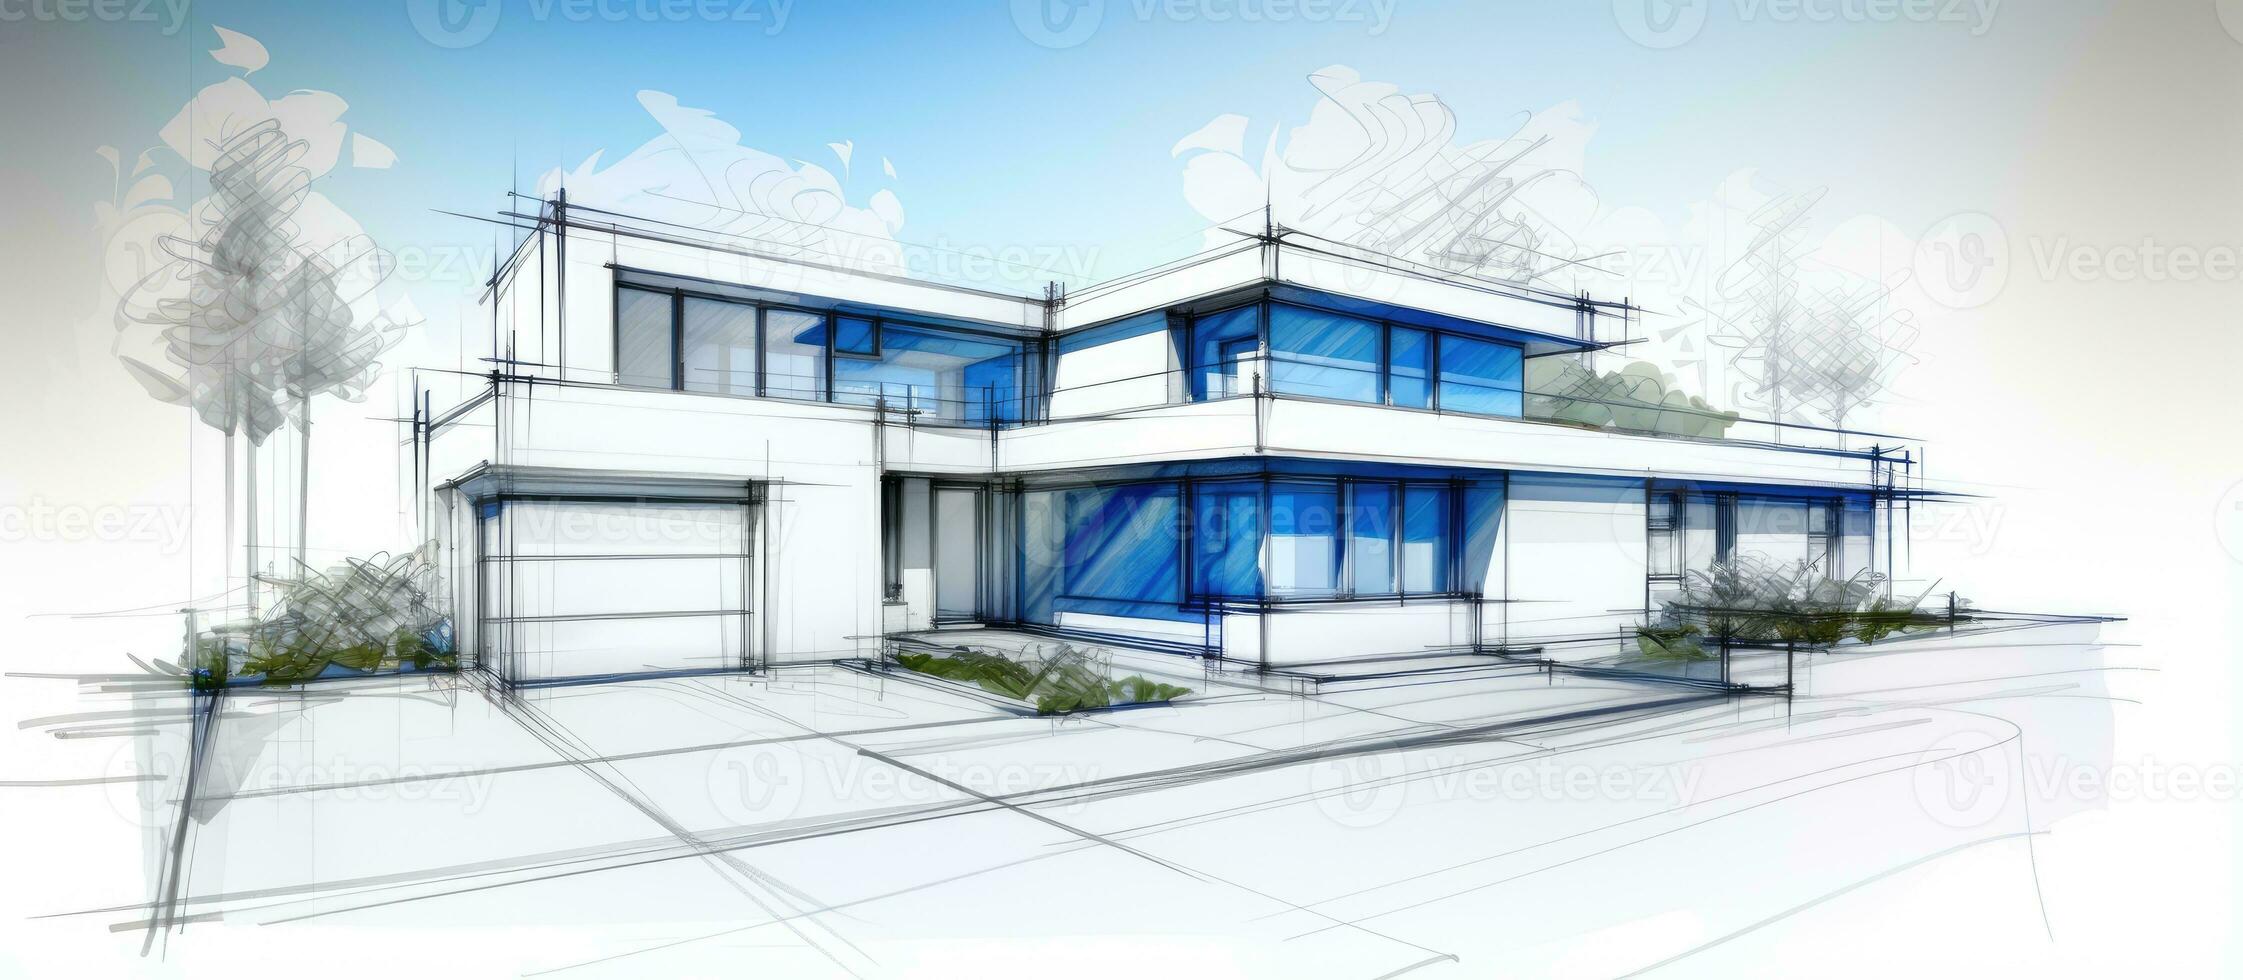 a house sketch design photo